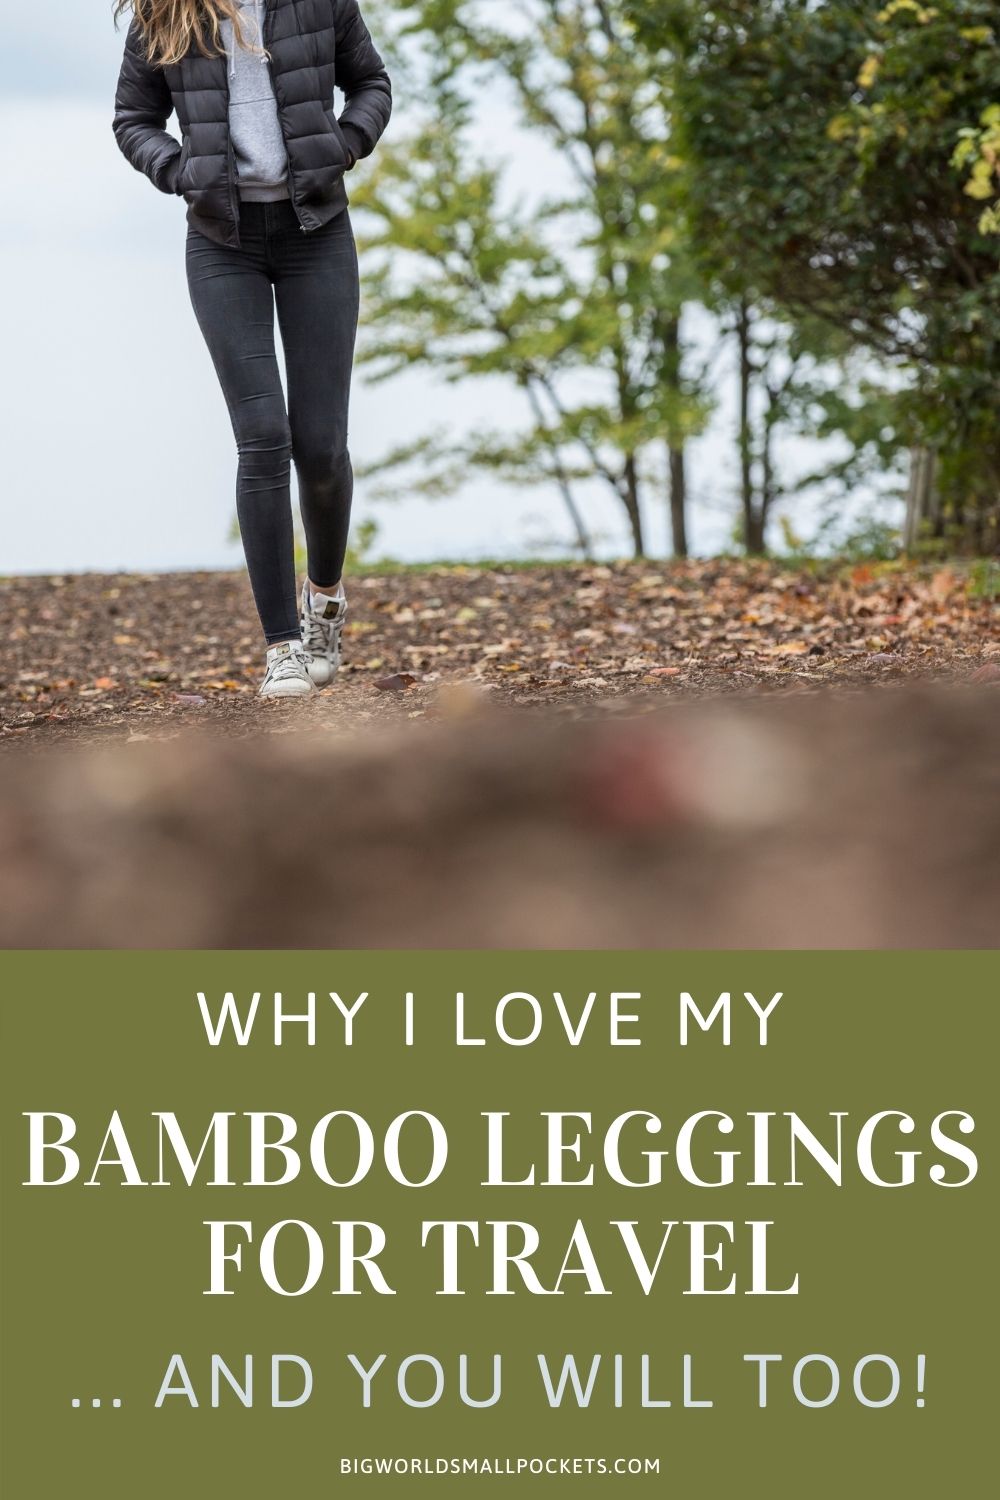 Why I Love Bamboo Leggings as Travel Wear - Big World Small Pockets